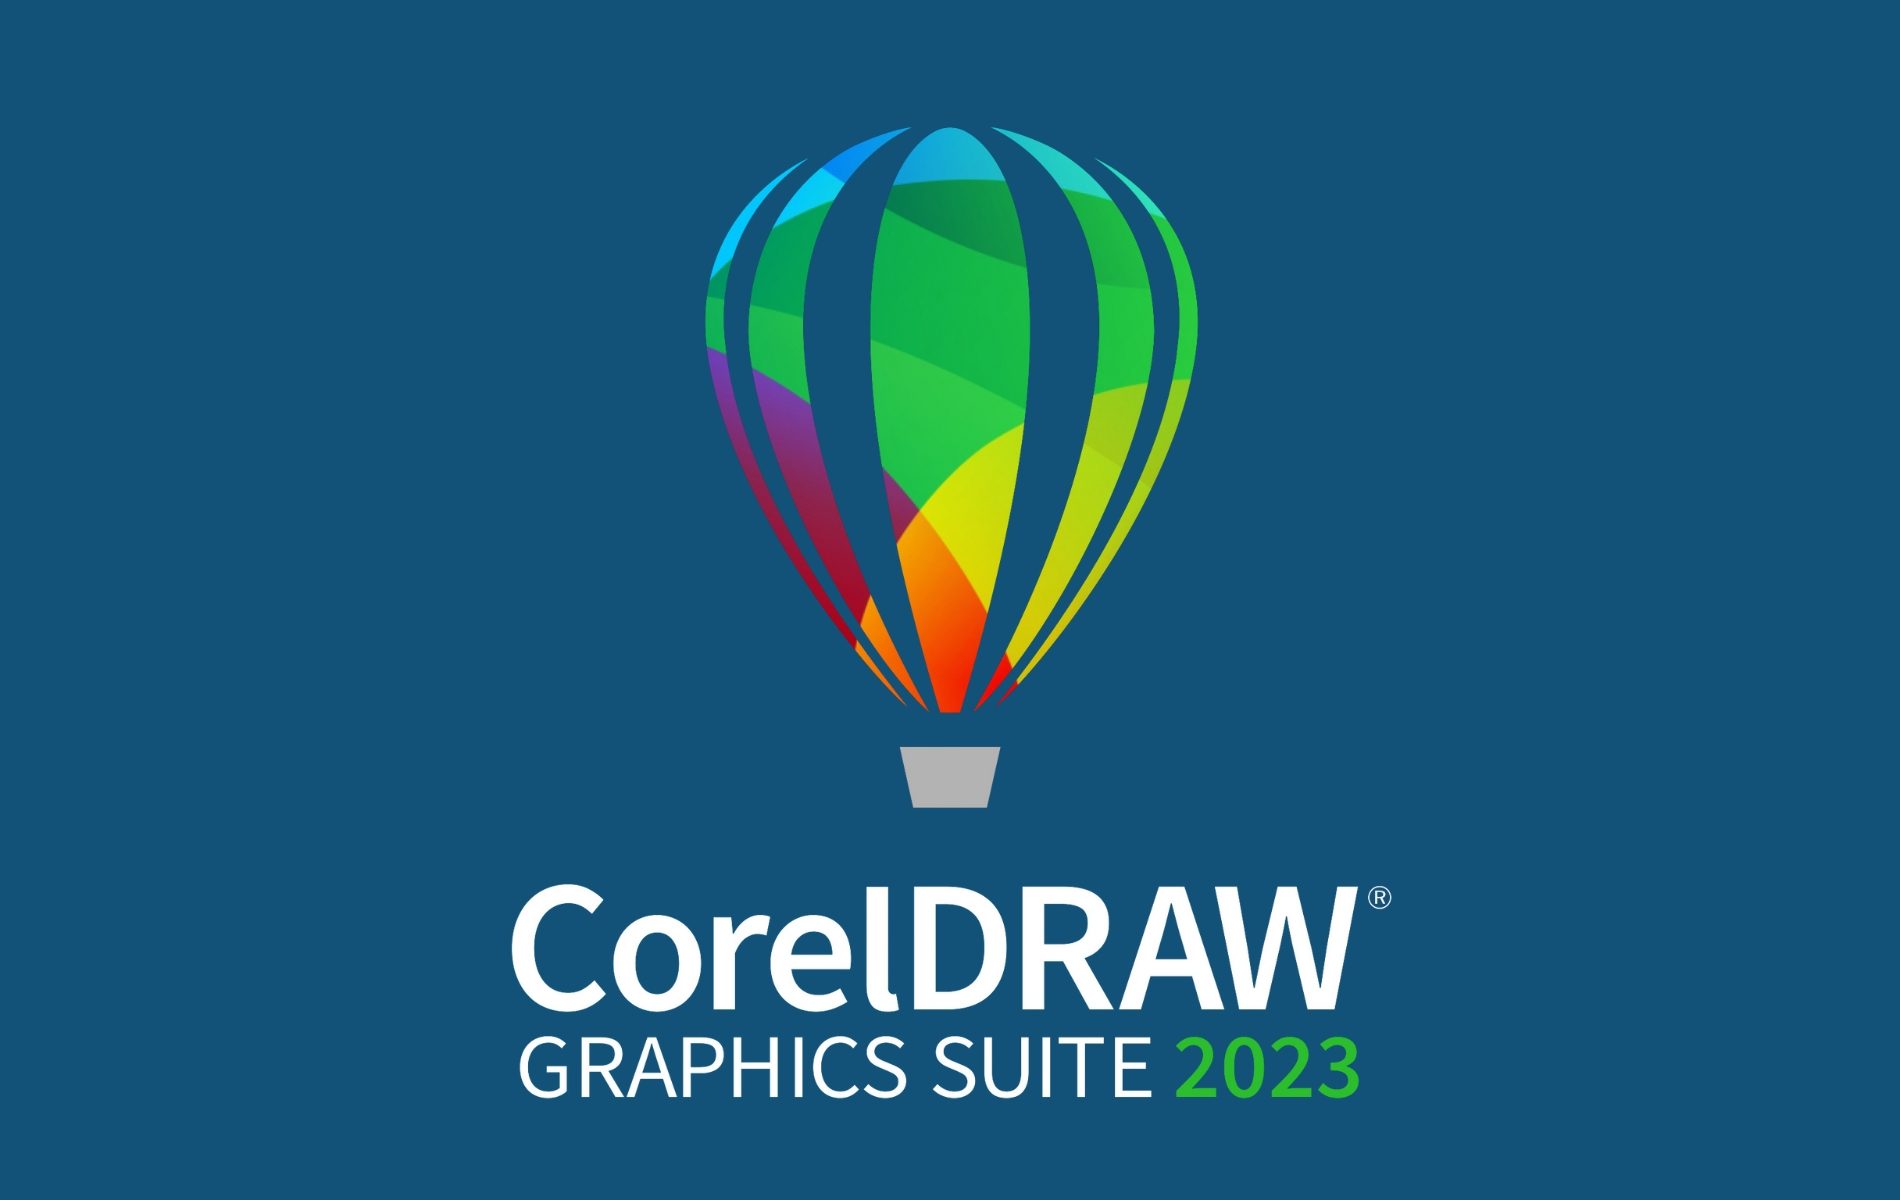 Corel Draw Certification Training Courses in Abu Dhabi | Corel Draw Classes  | Graphic Designing Training